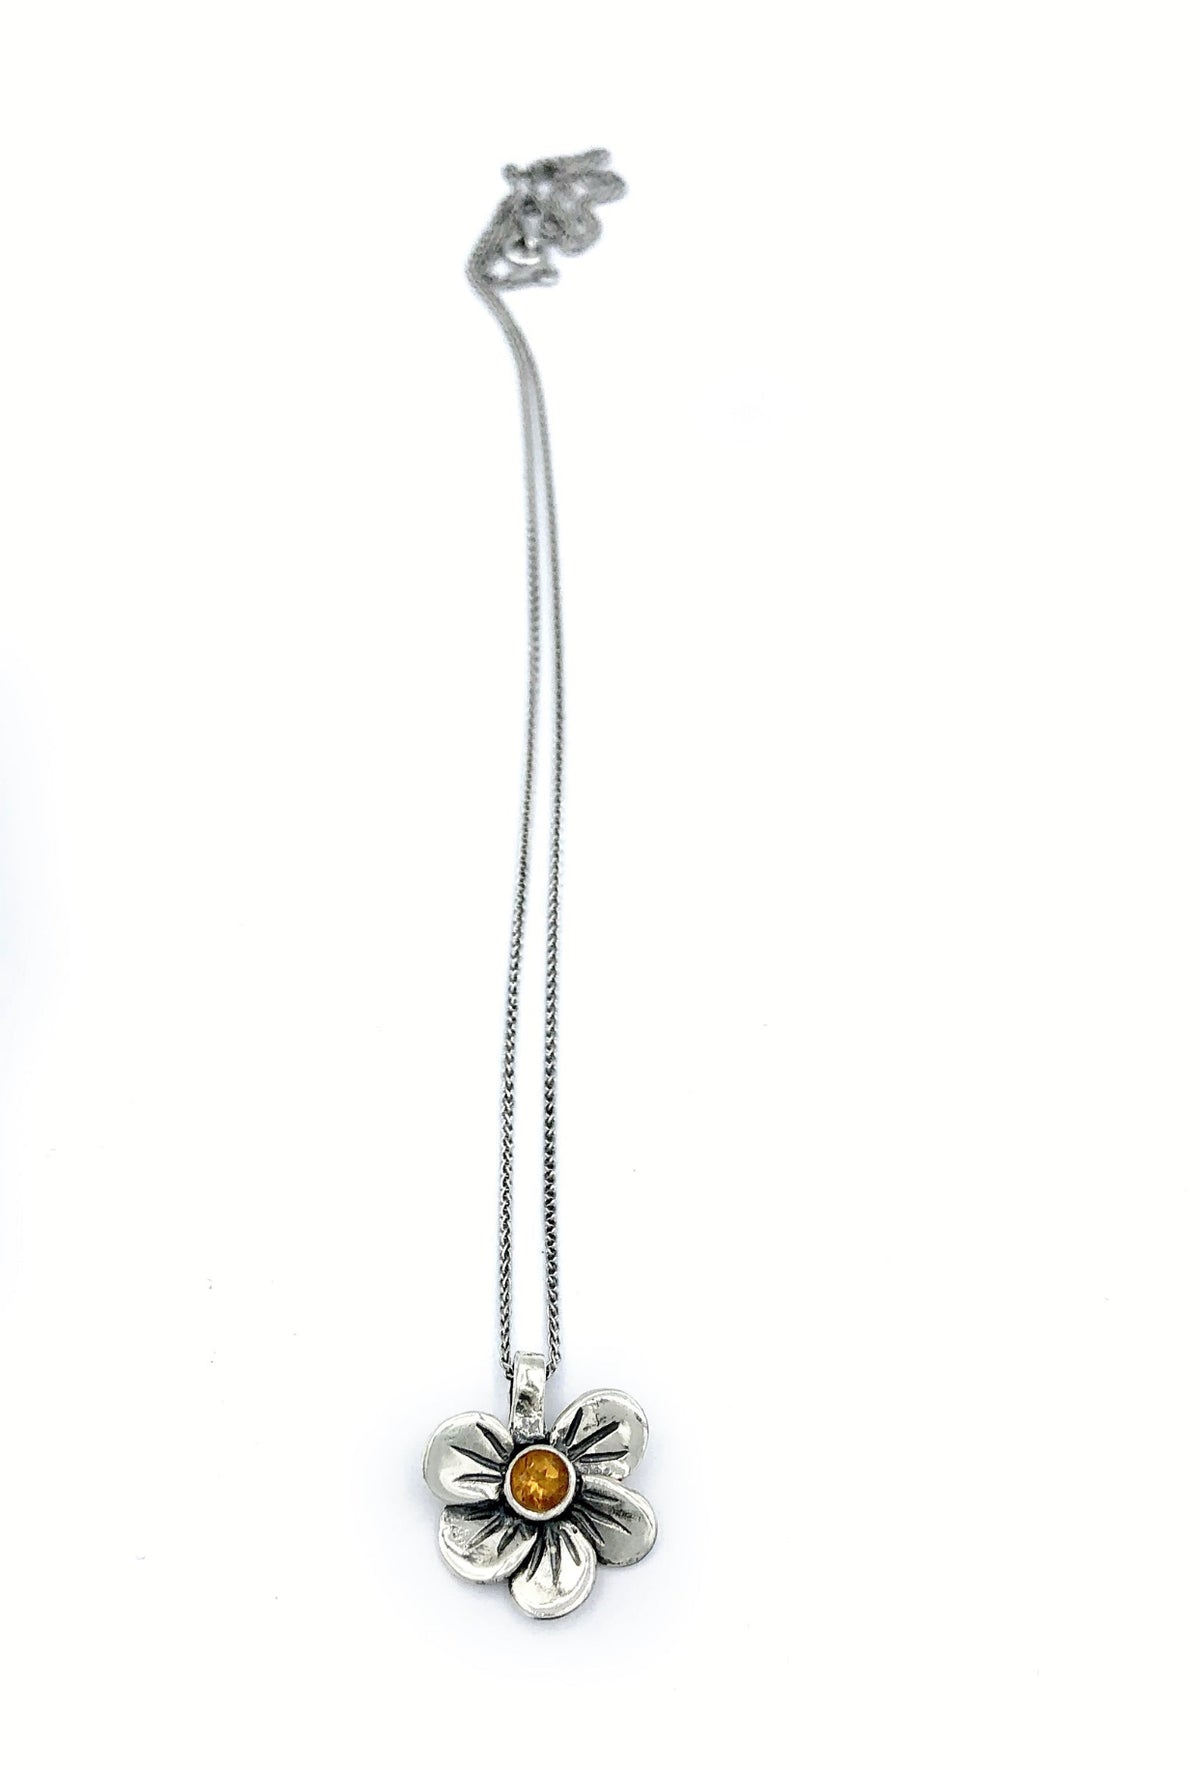 flower pendant silver with citrine gemstone